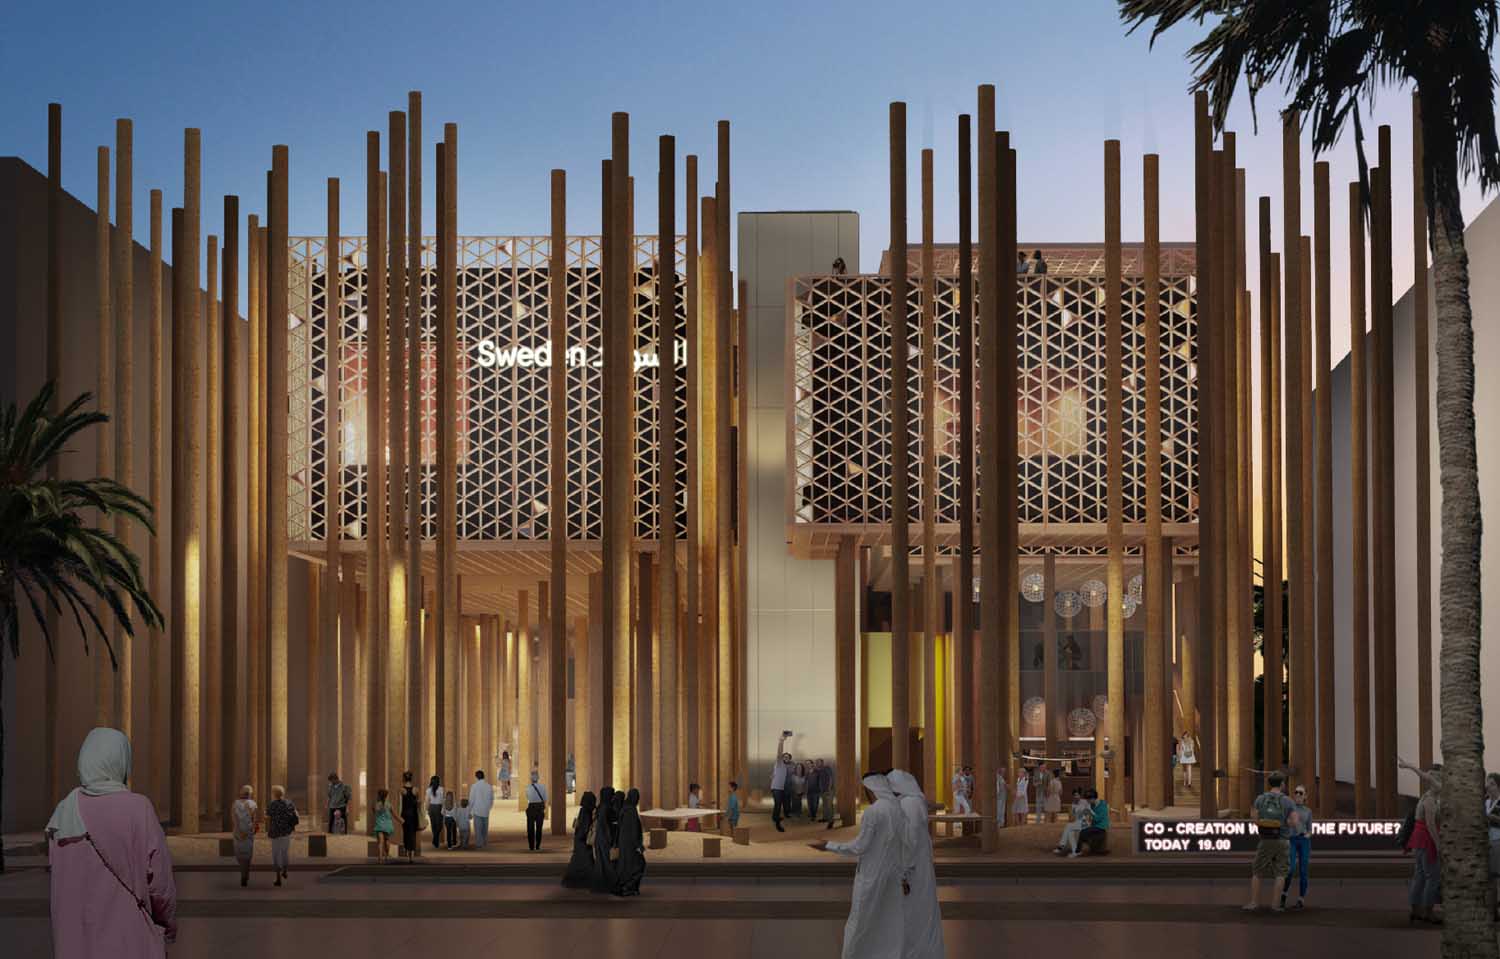 The forest: sweden’s ecosystem pavilion at expo 2020 Dubai